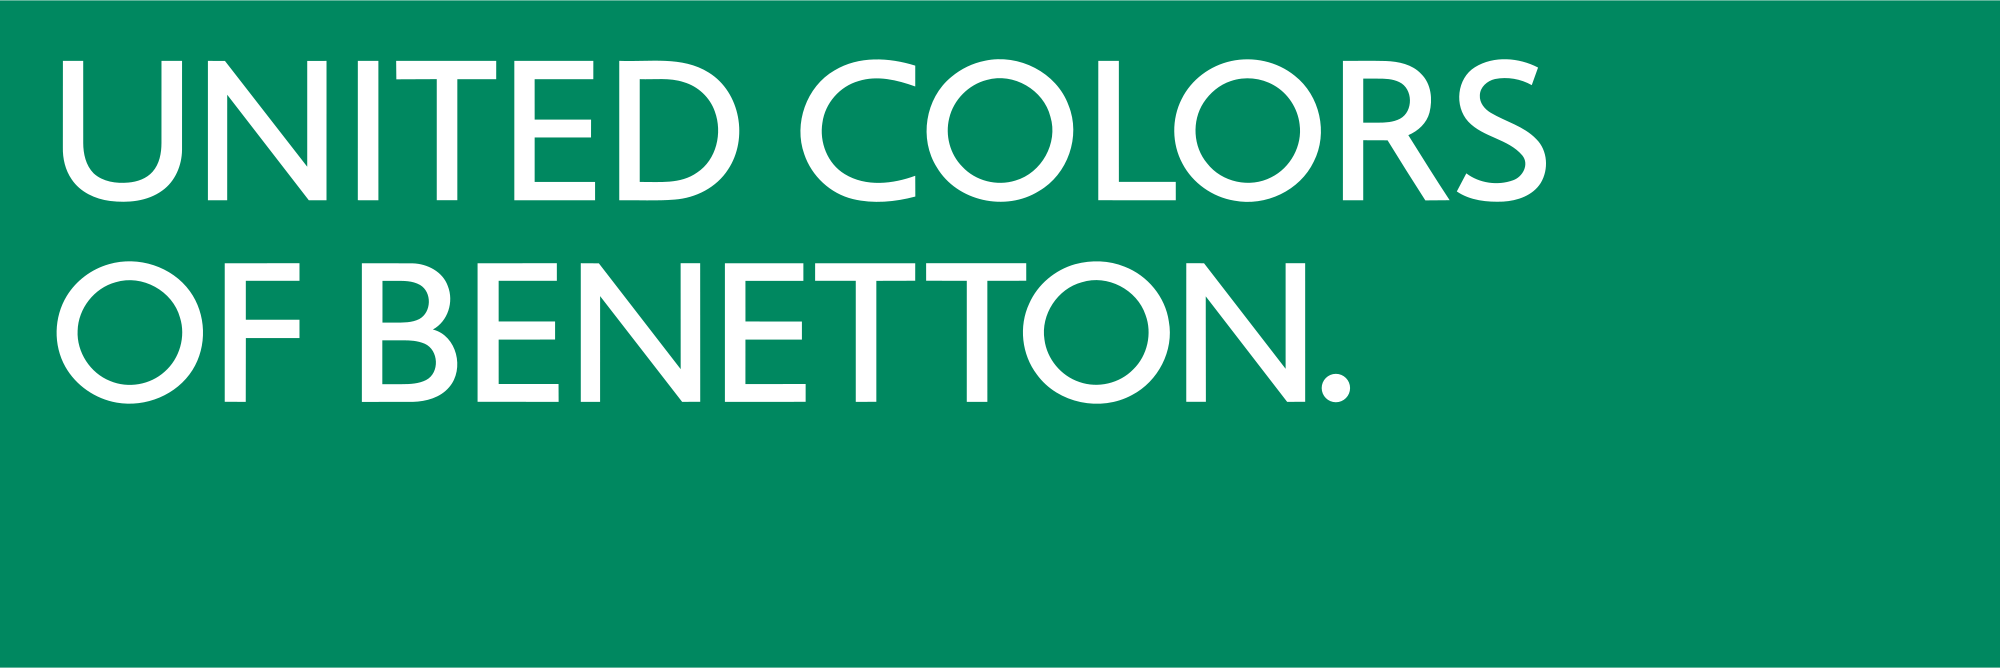 United Colors Logo - Benetton Group logo.svg